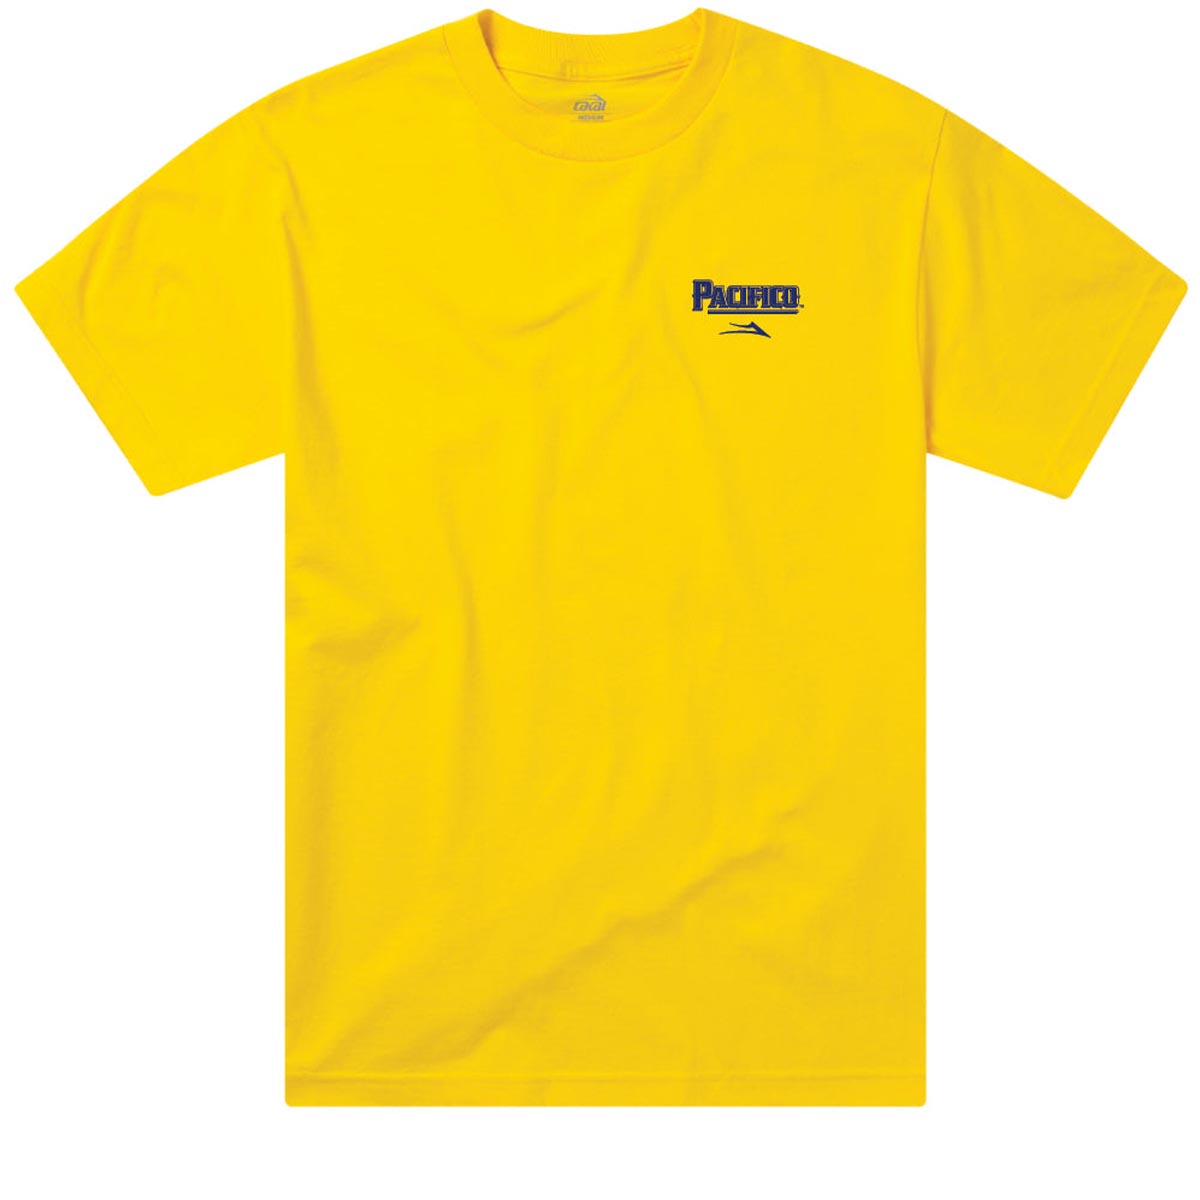 Lakai x Pacifico Cerveza T-Shirt - Yellow image 2